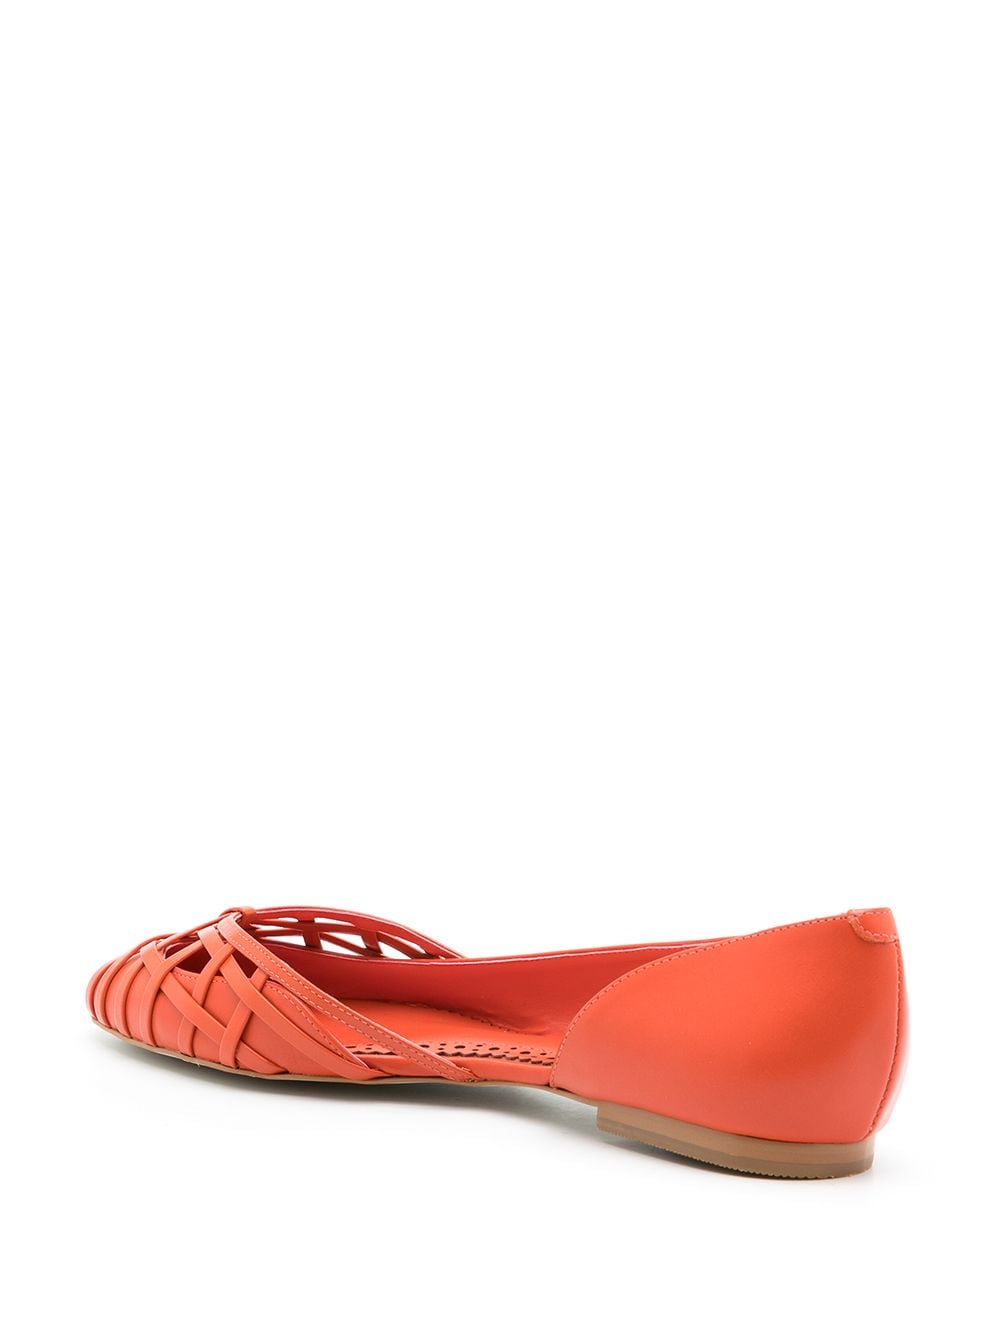 sarah chofakian victoria leather ballerina shoes - orange